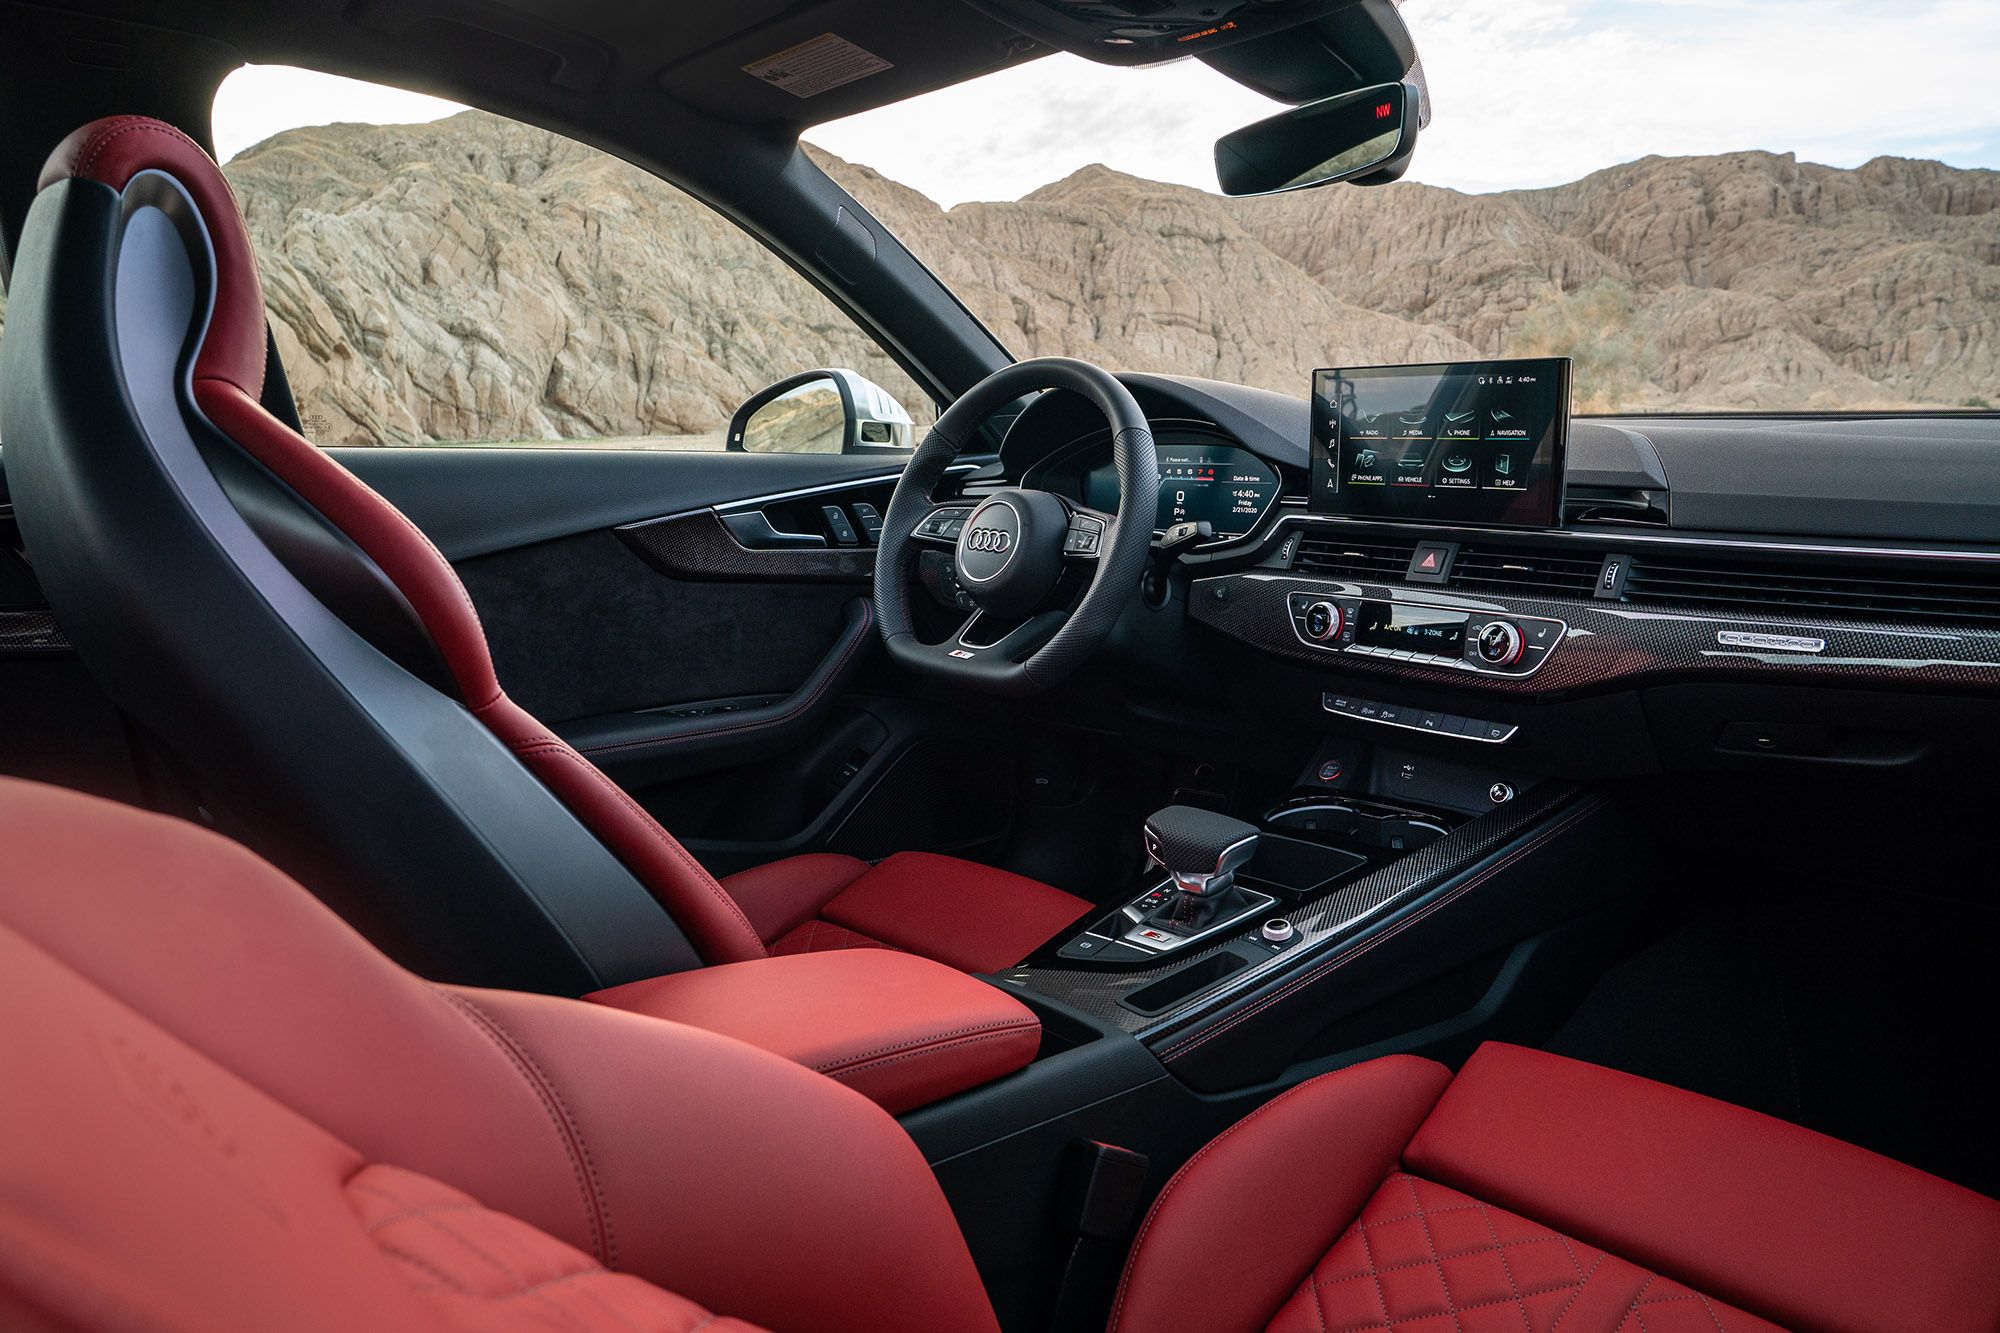 Audi S4 interior in red